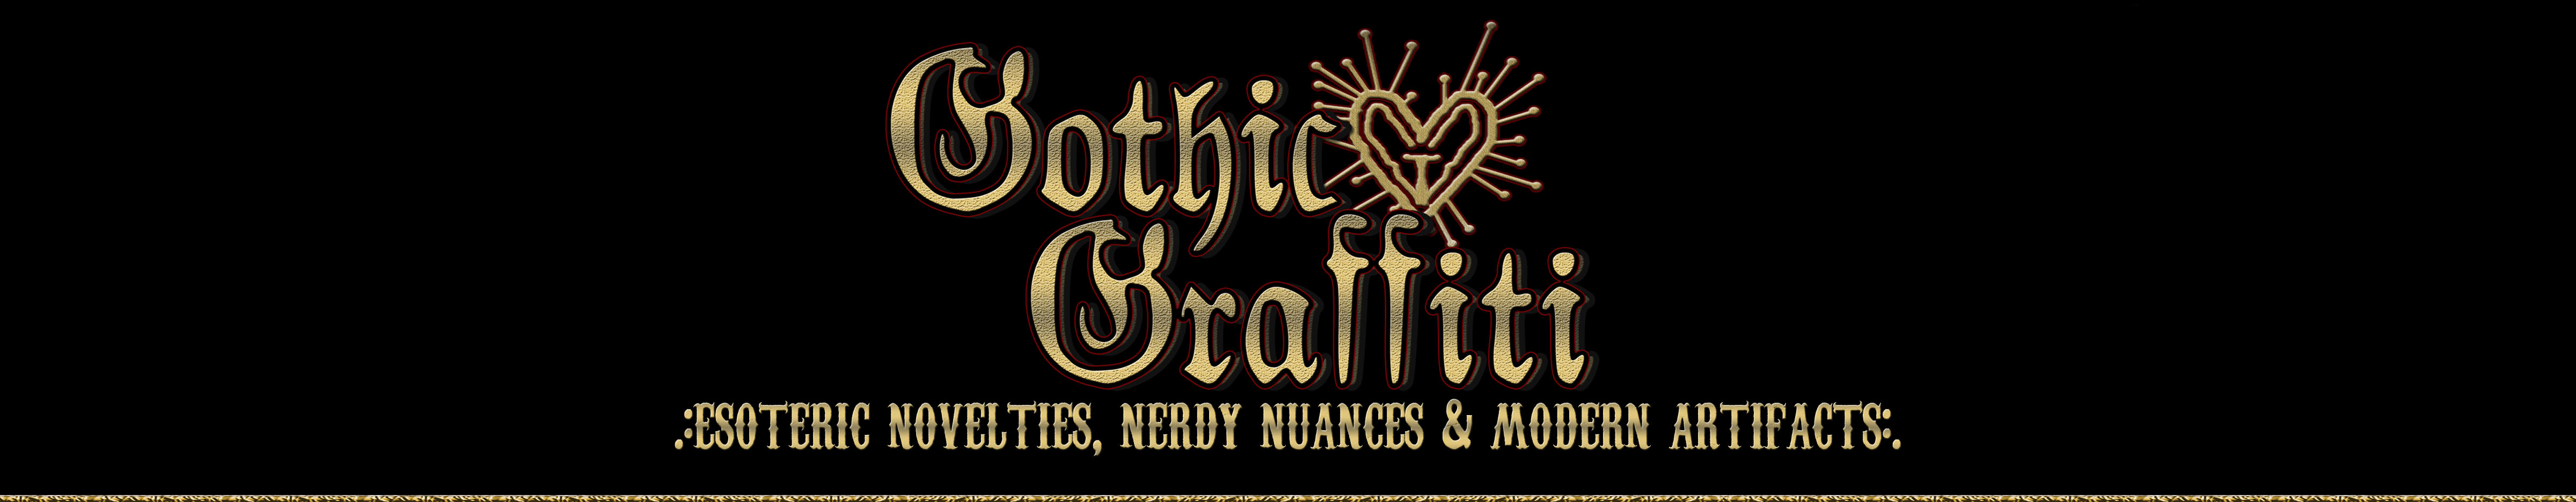 Gothic Graffiti header